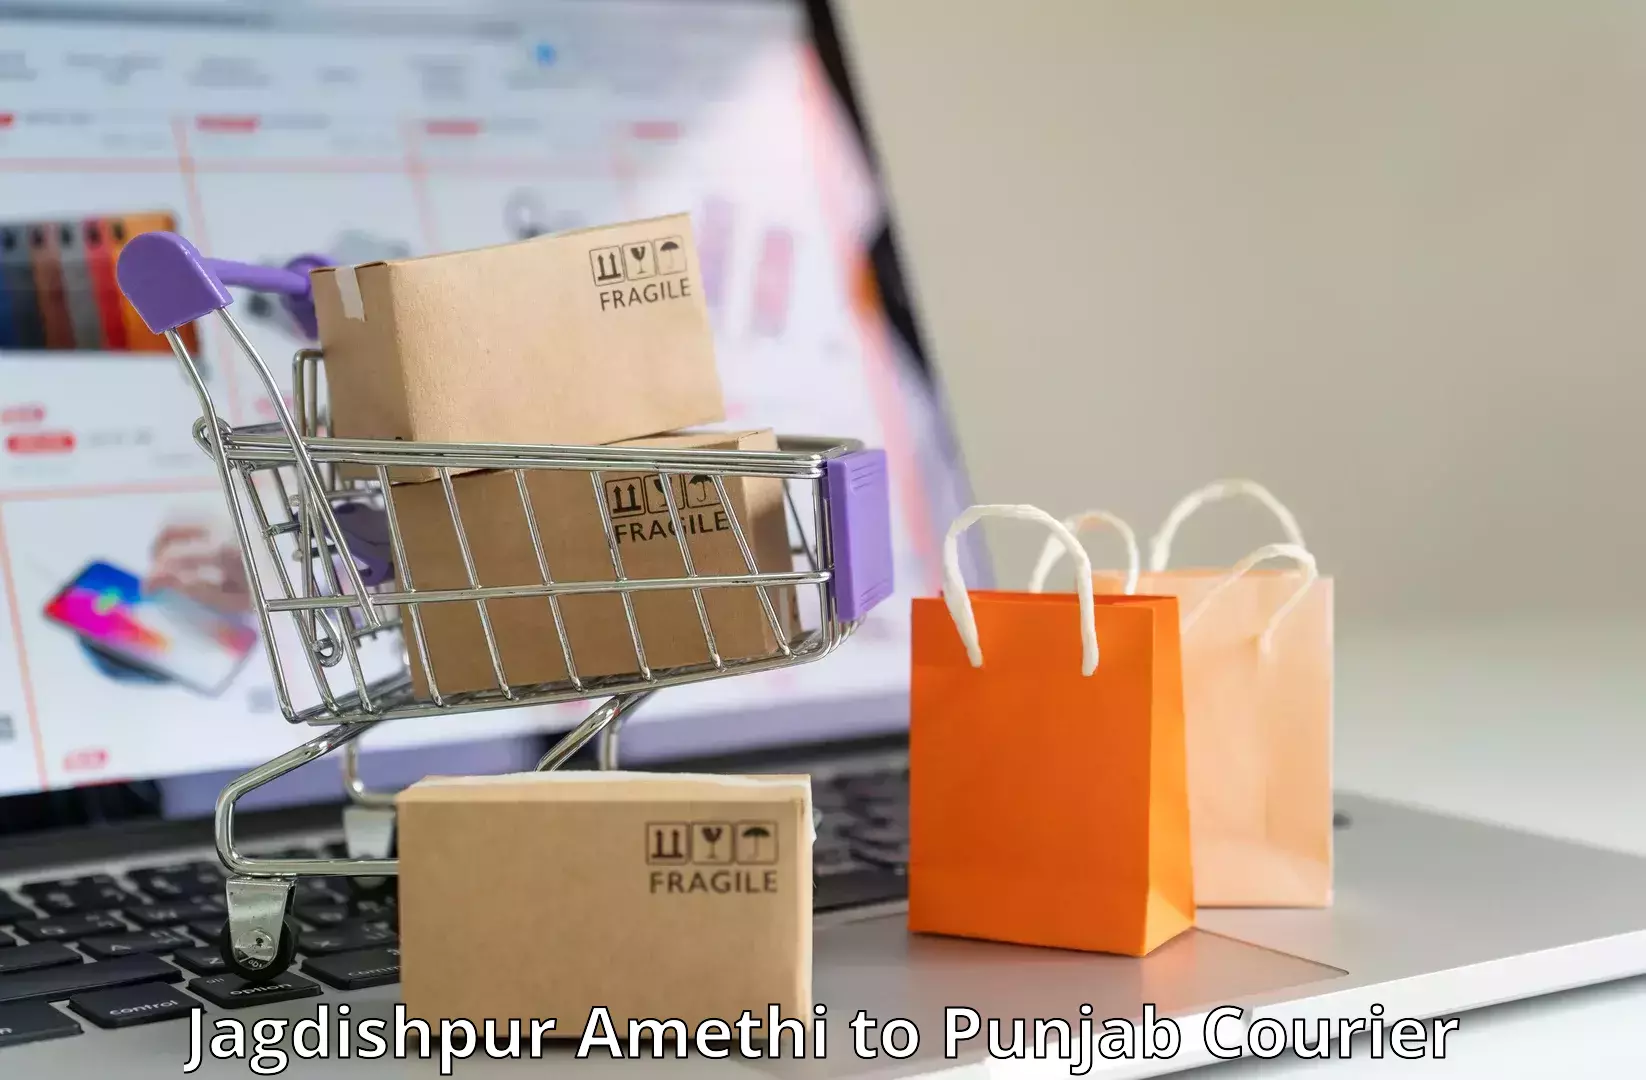 High-speed parcel service Jagdishpur Amethi to Nawanshahr